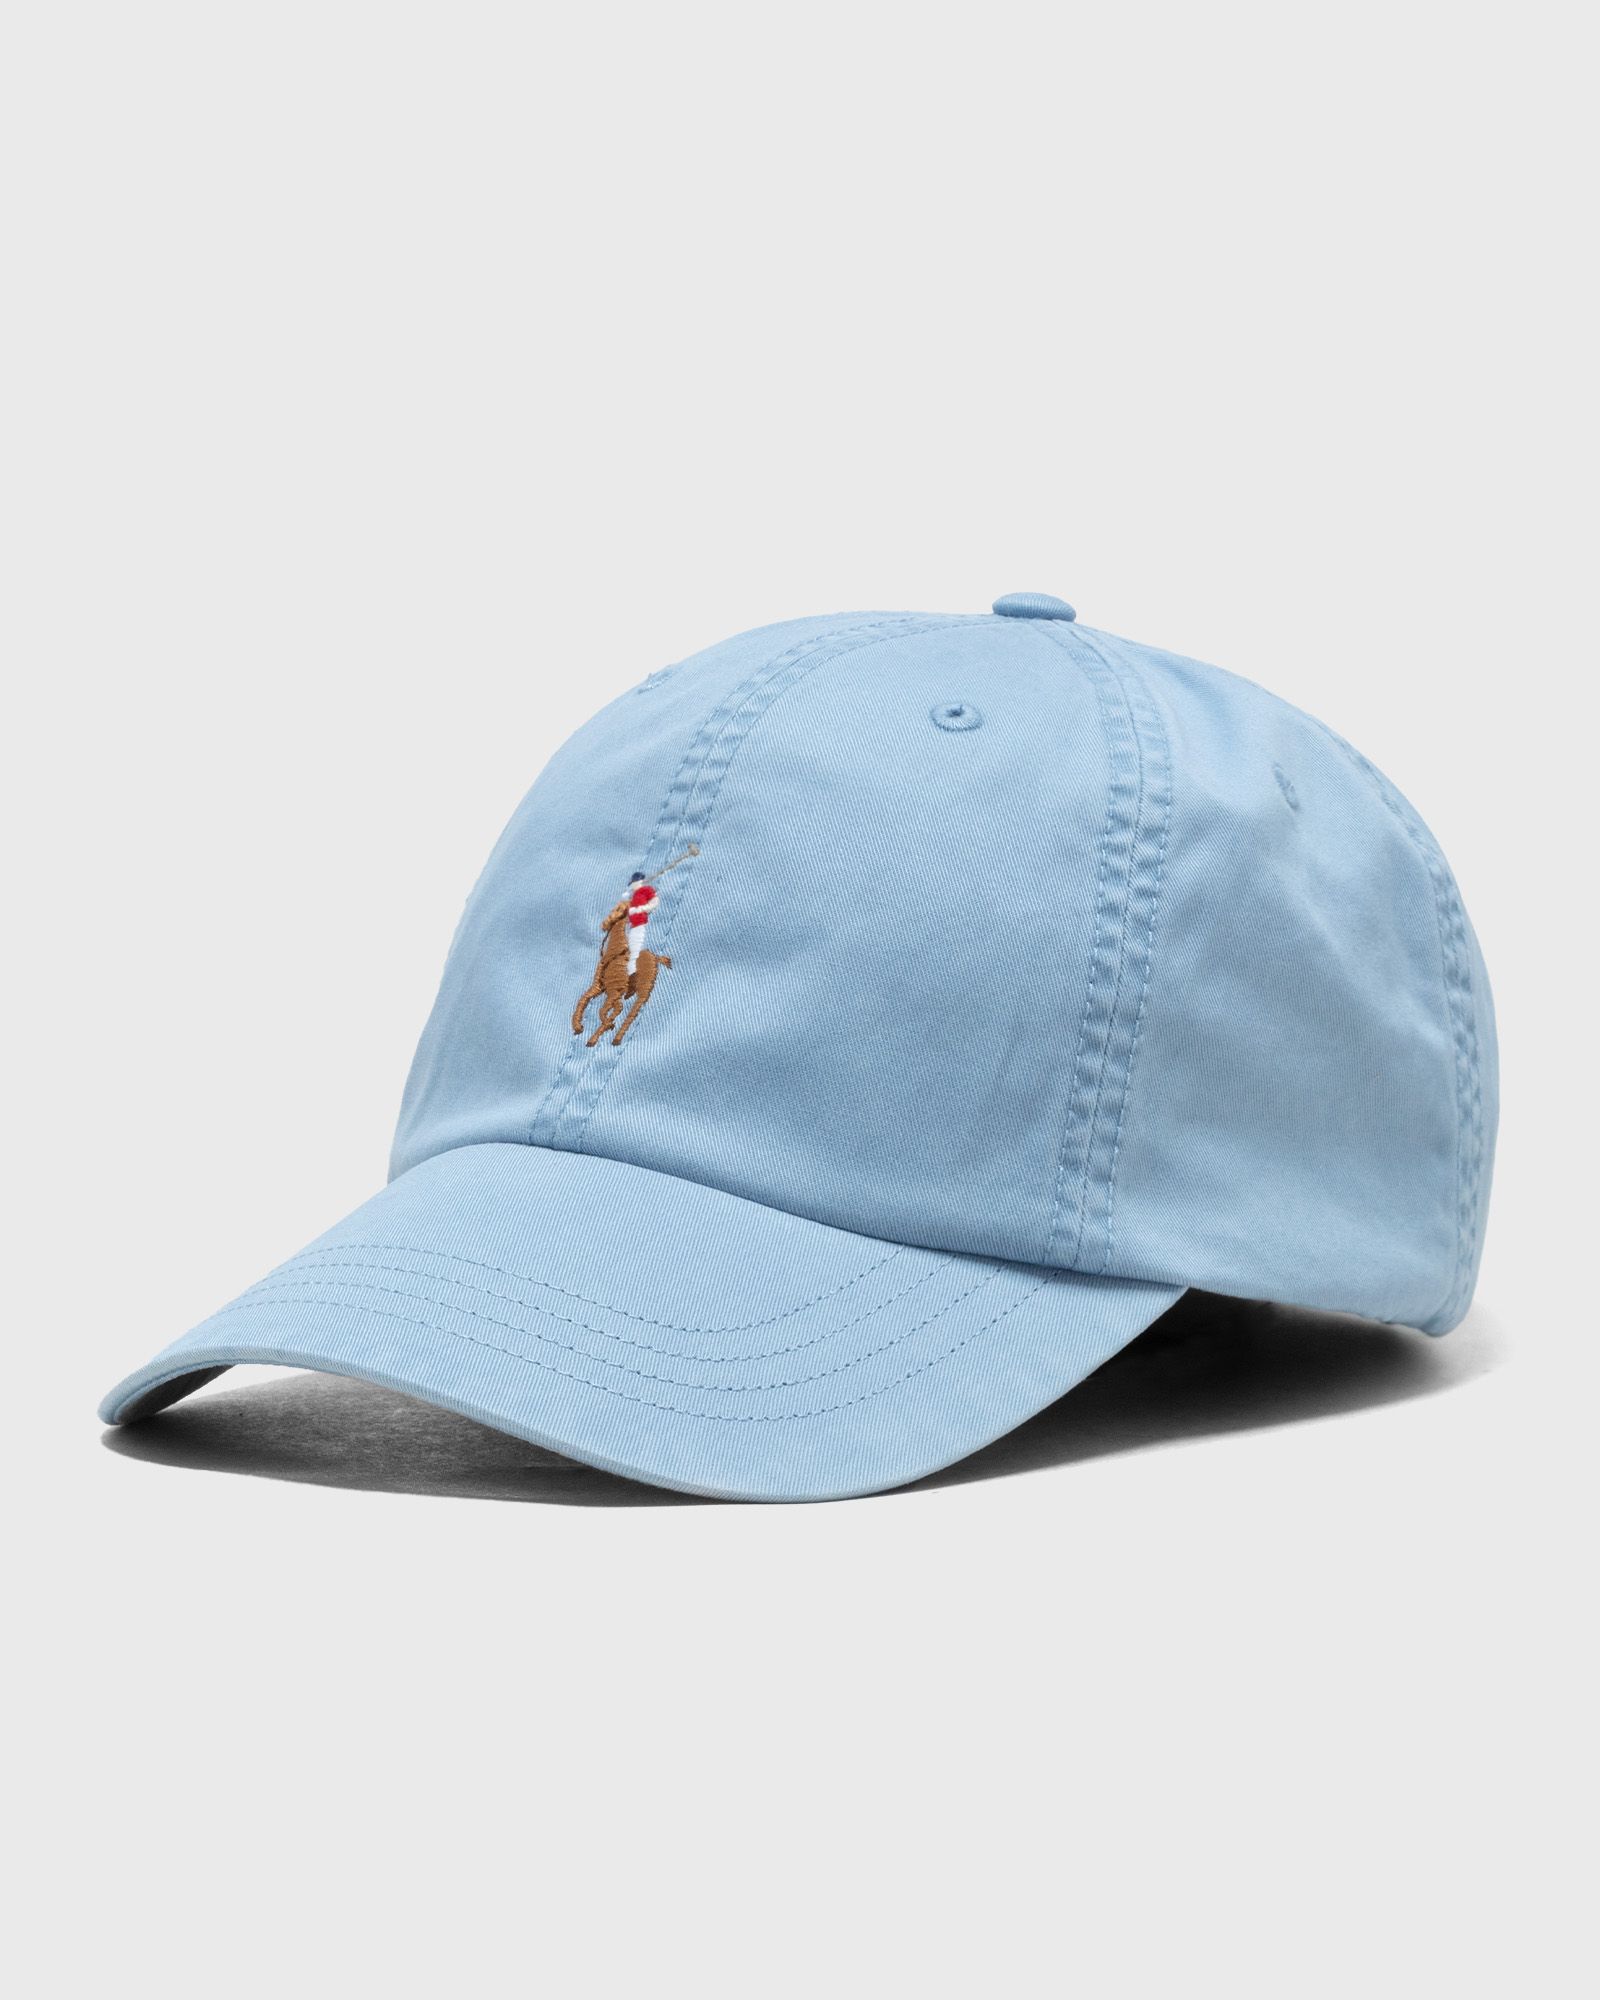 Polo Ralph Lauren - cls sprt cap-hat men caps blue in größe:one size